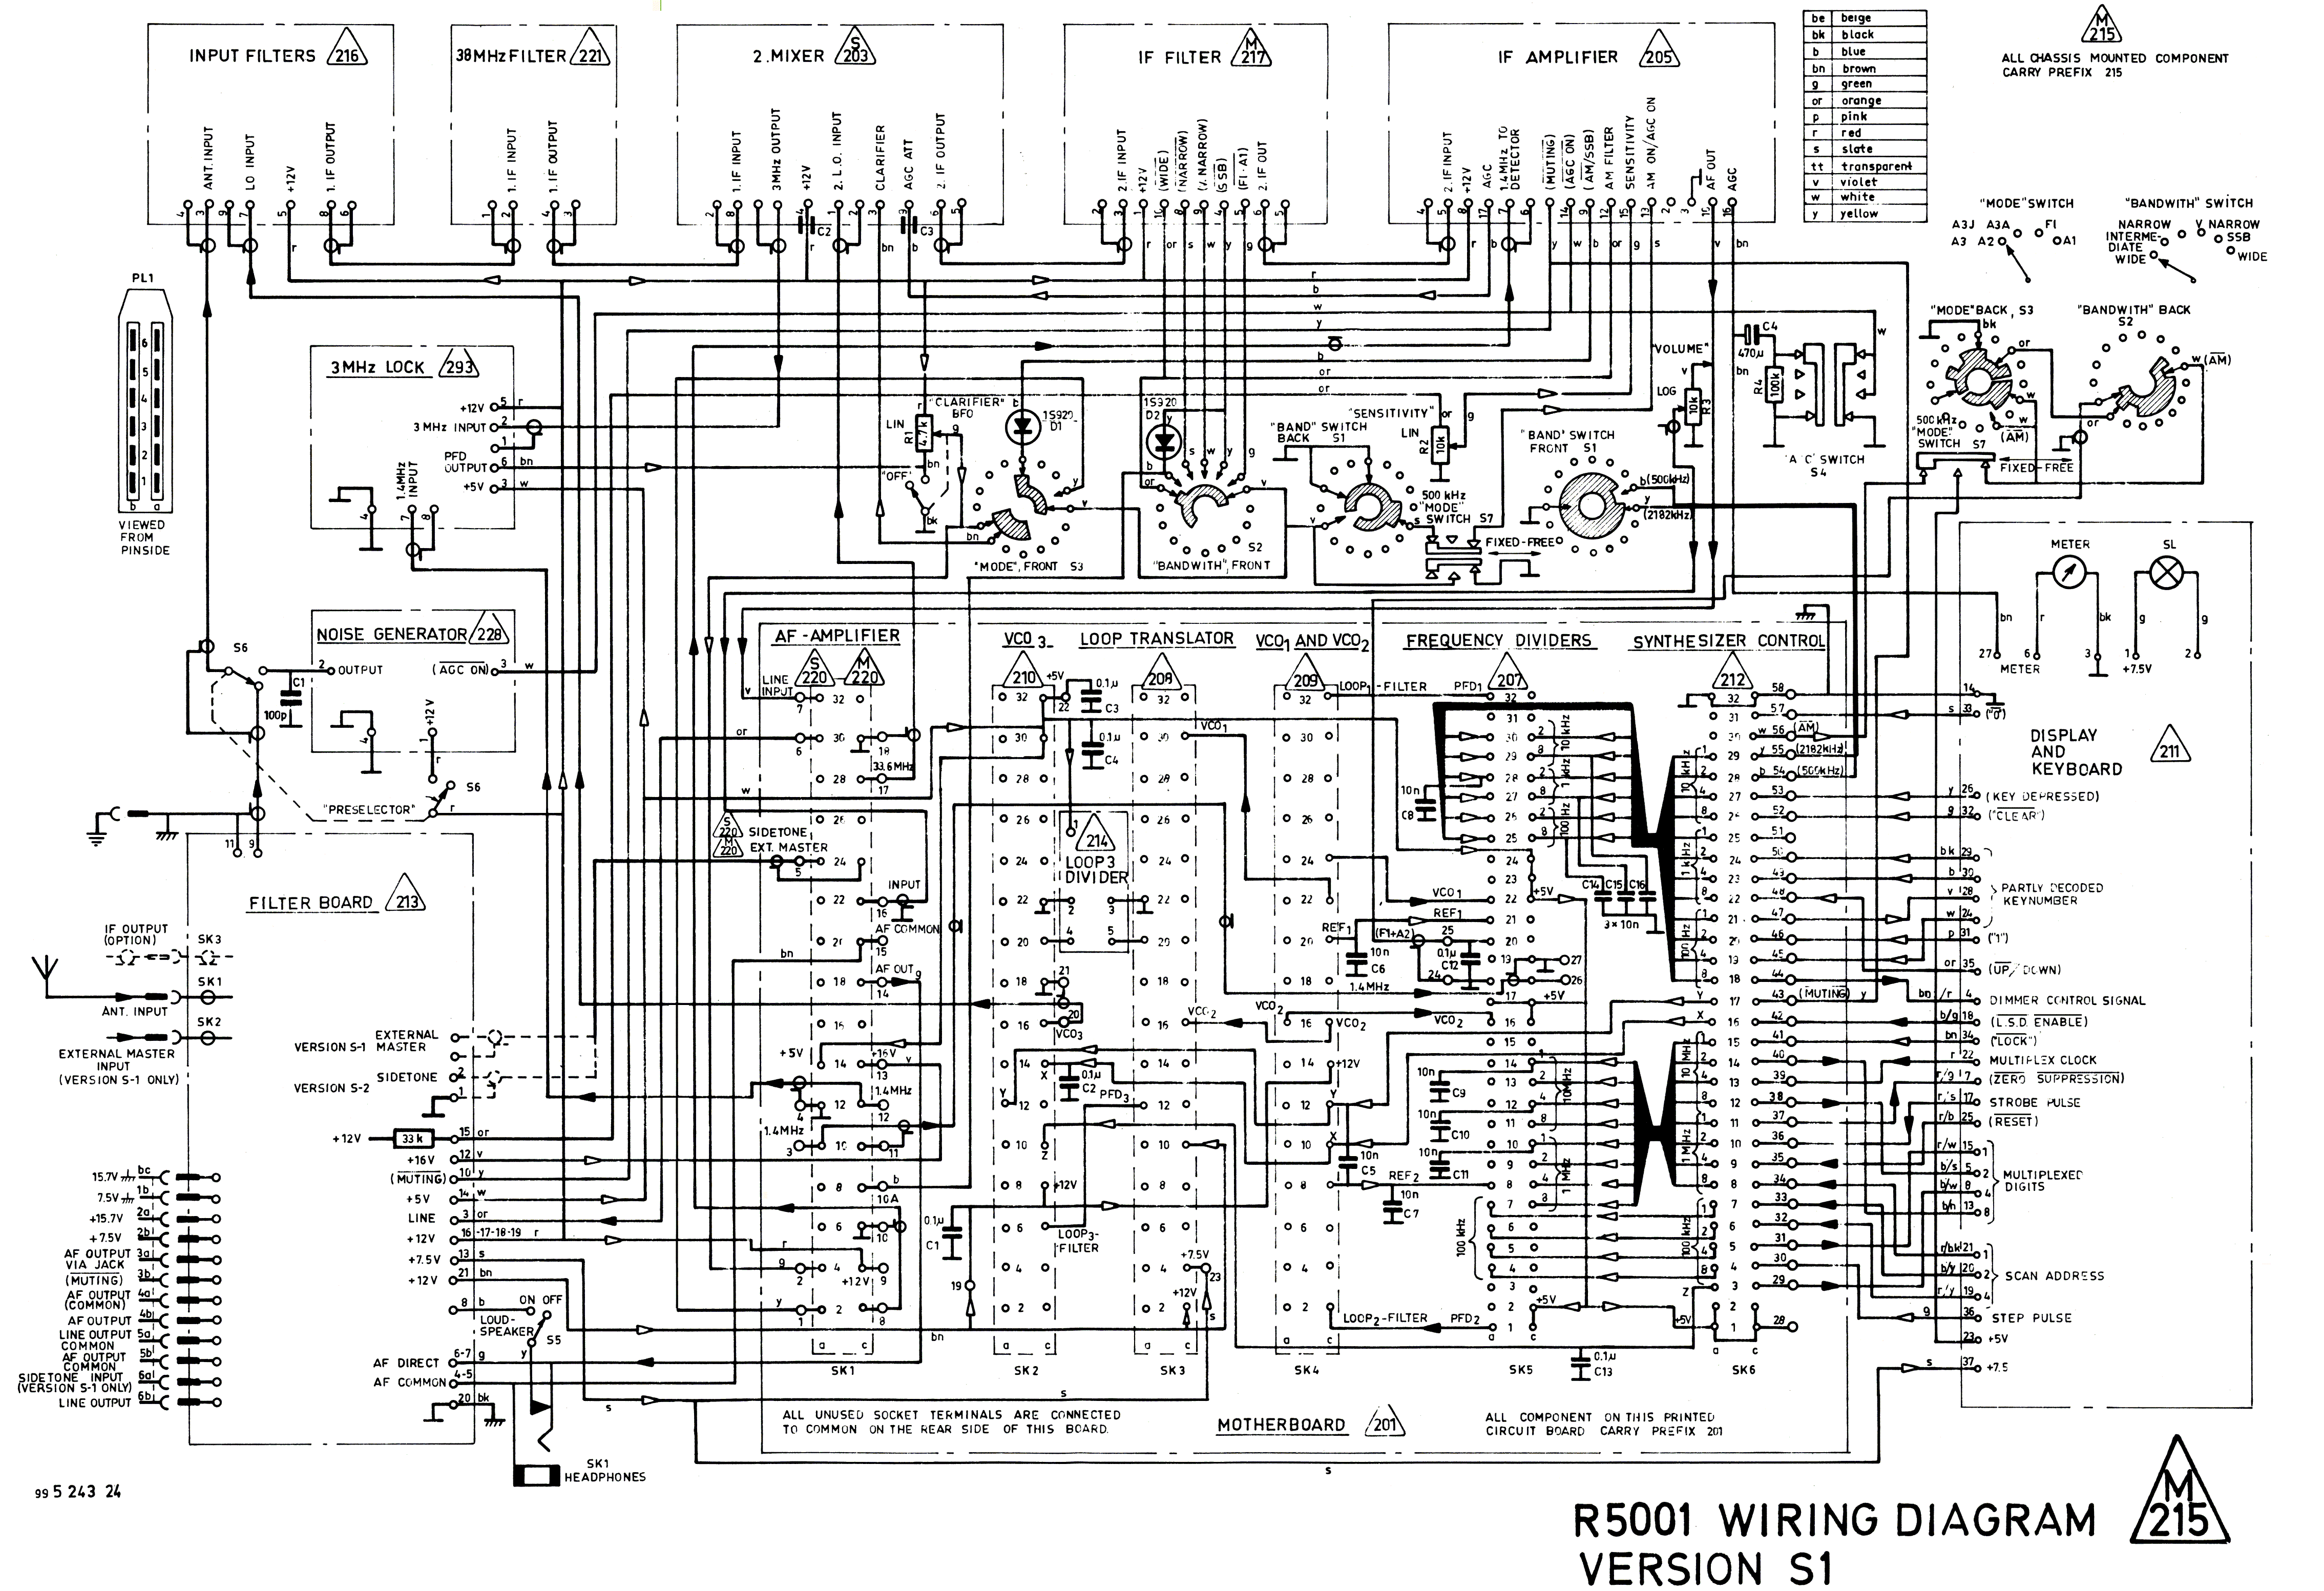 Skanti R-5001 wirering diagram 215